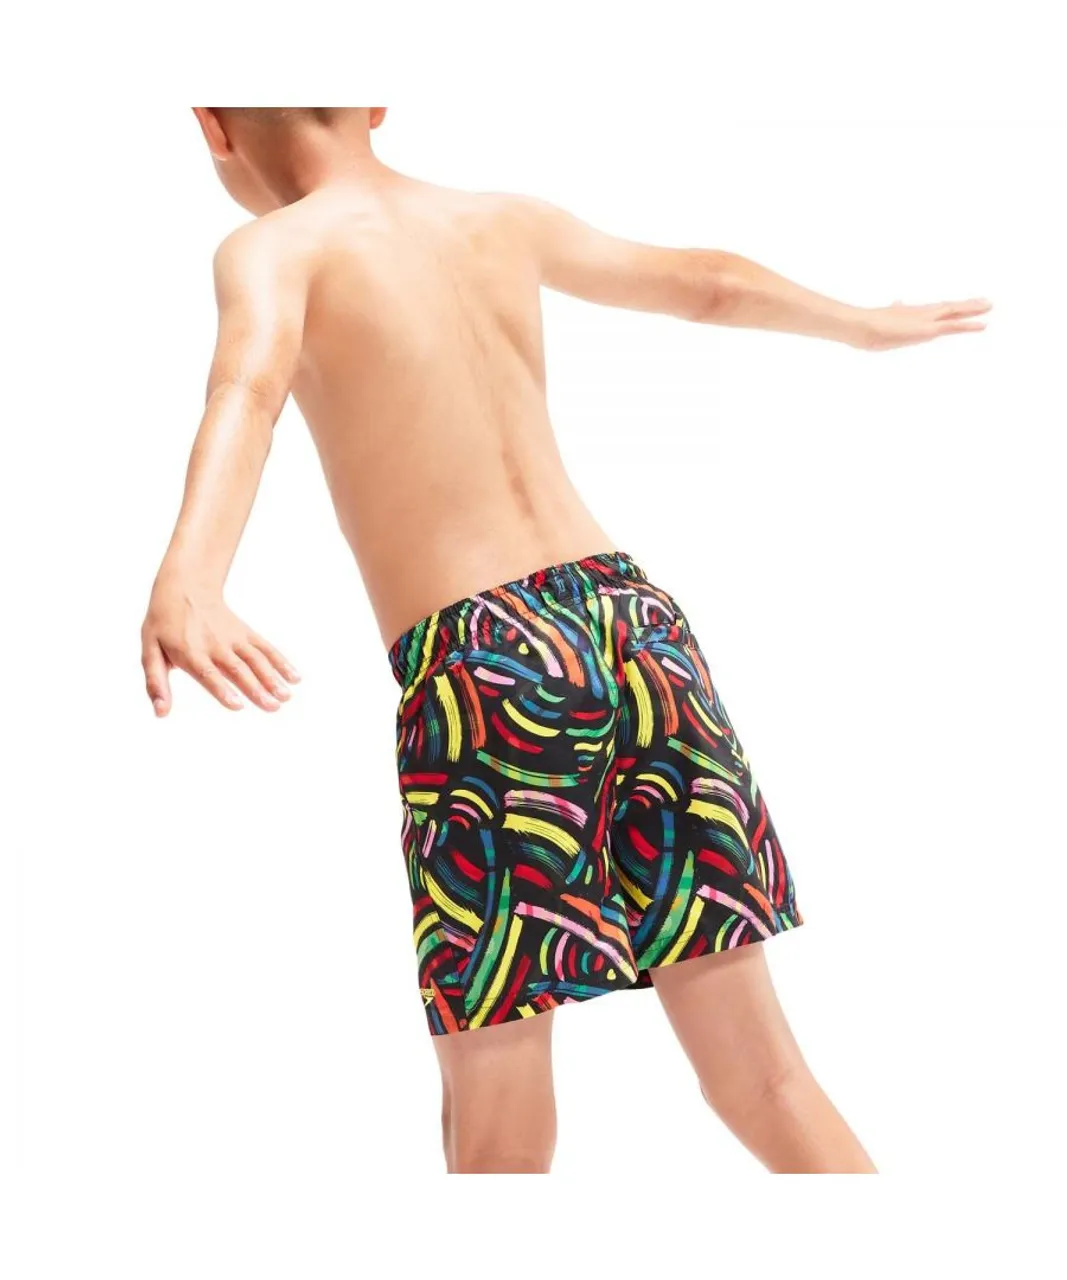 Speedo Boys Boy's Digital Print 13 inch Swim Shorts in Black Red